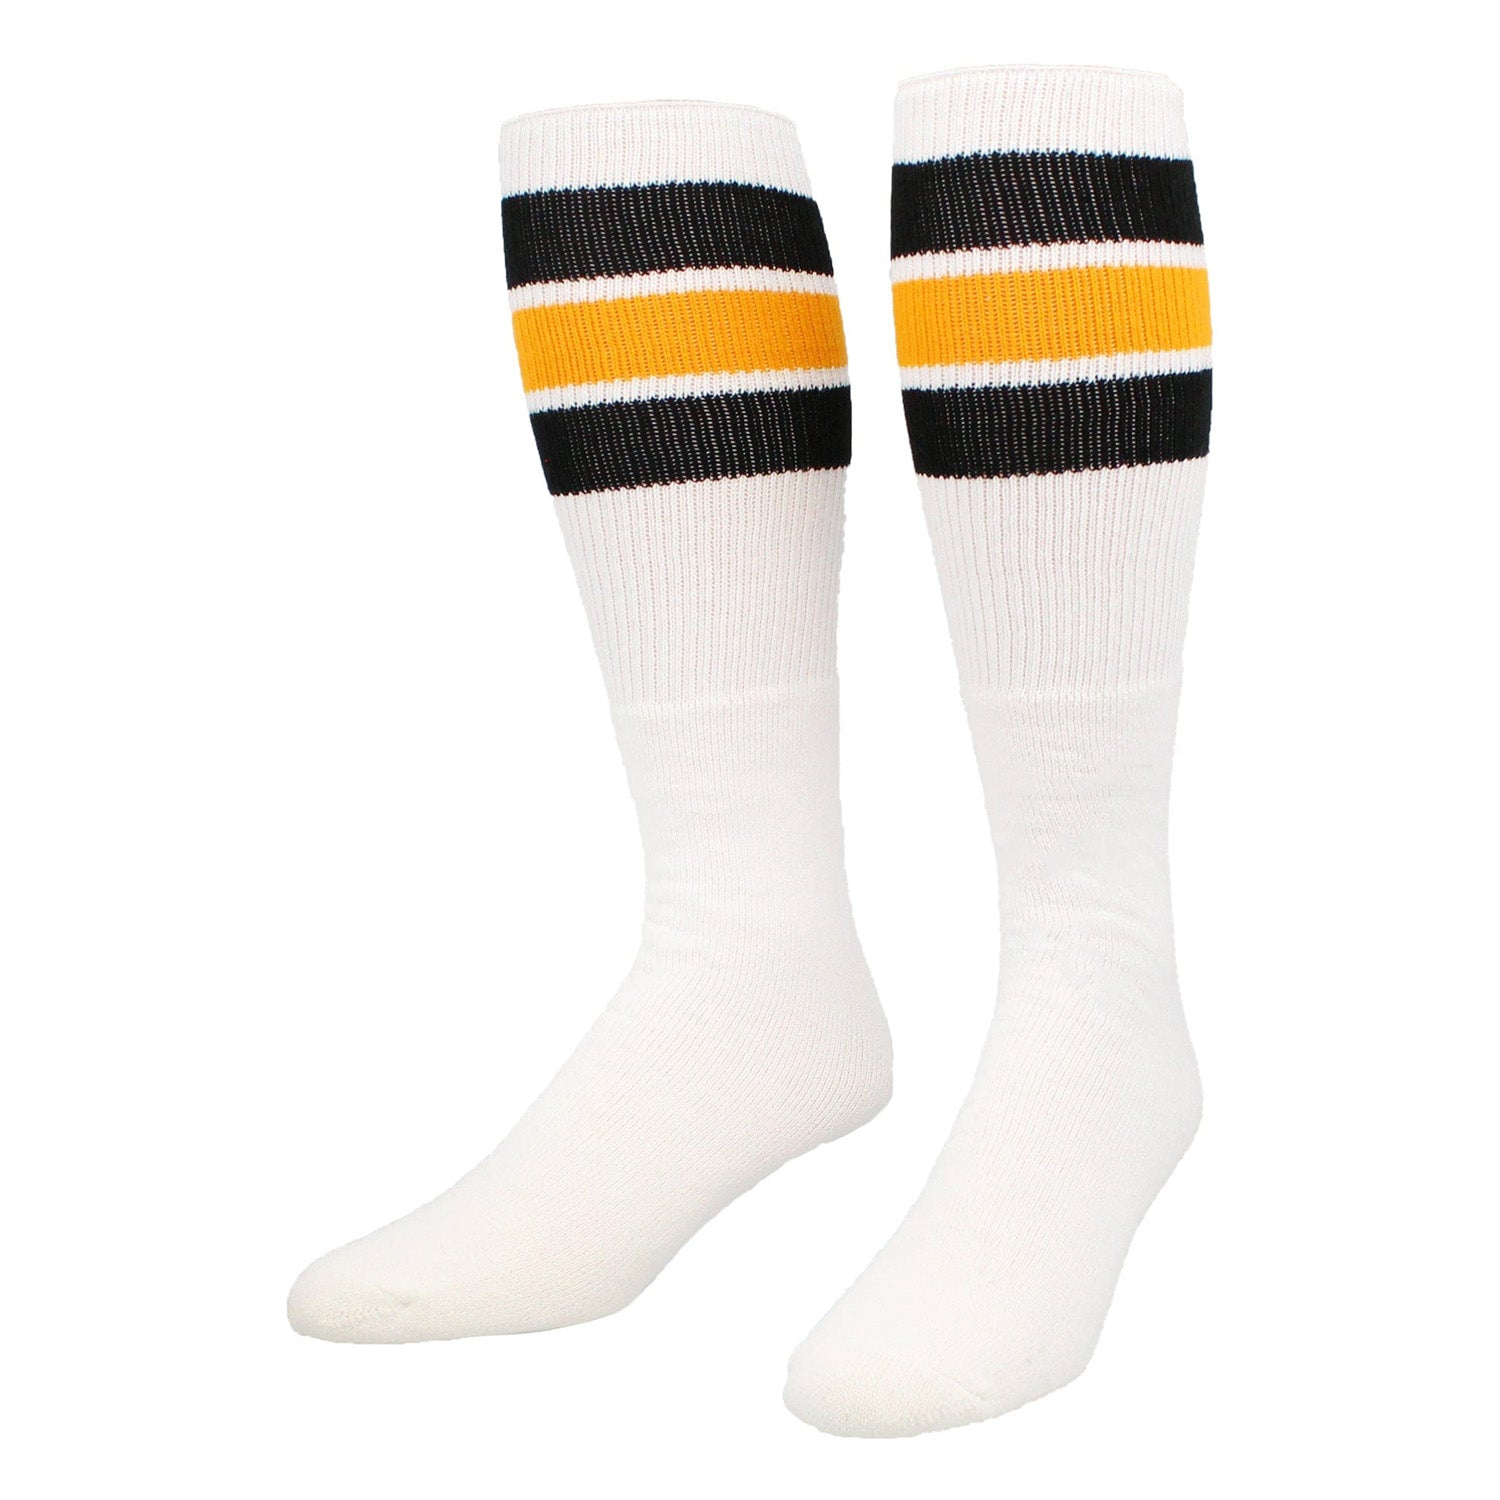 retro tube socks with stripes